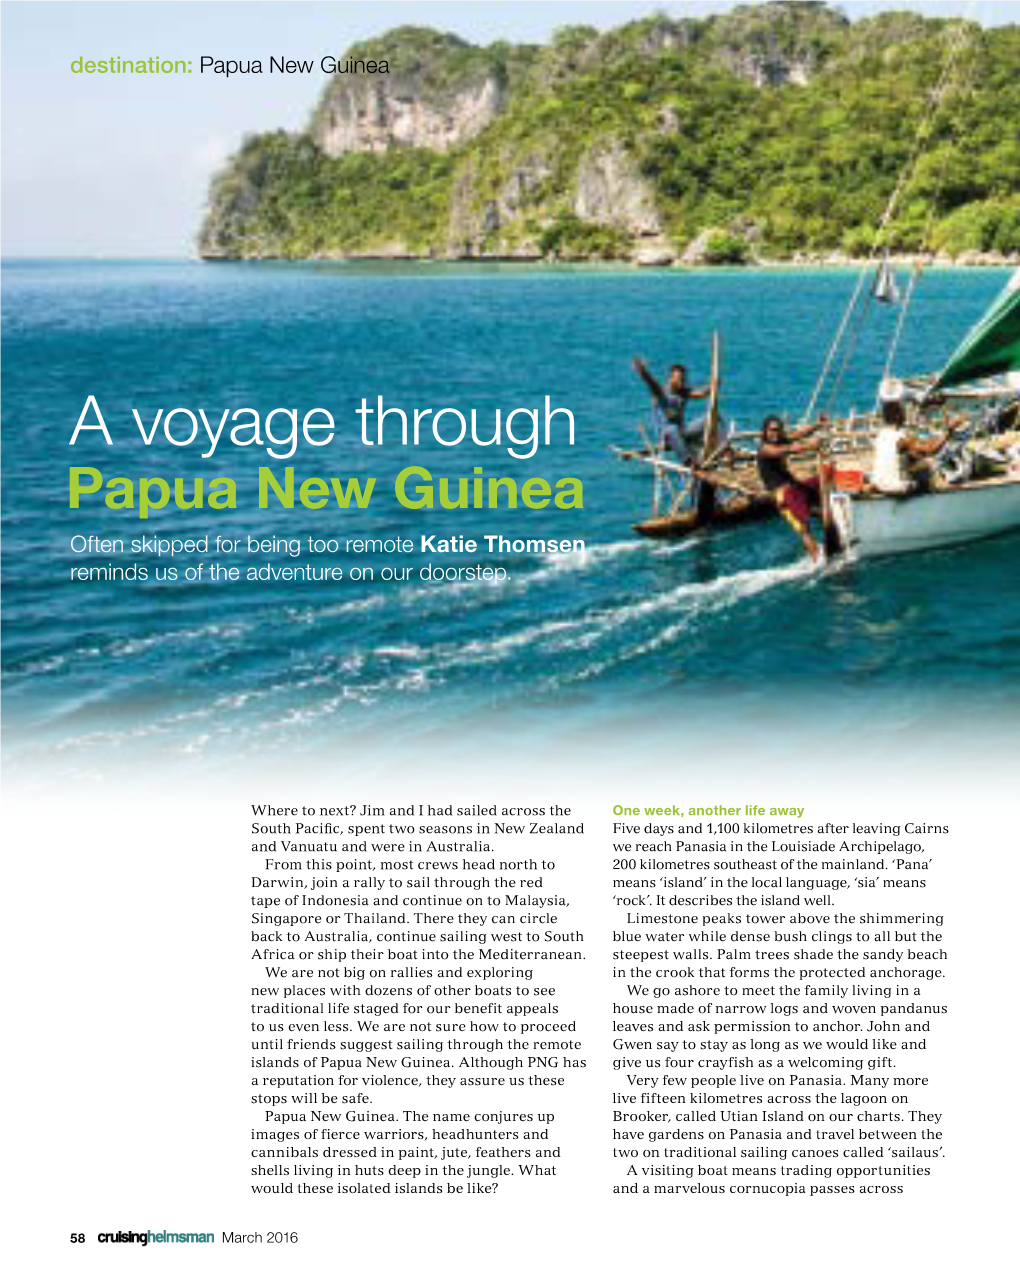 Katie's Article, a Voyage Through Papua New Guinea, Has